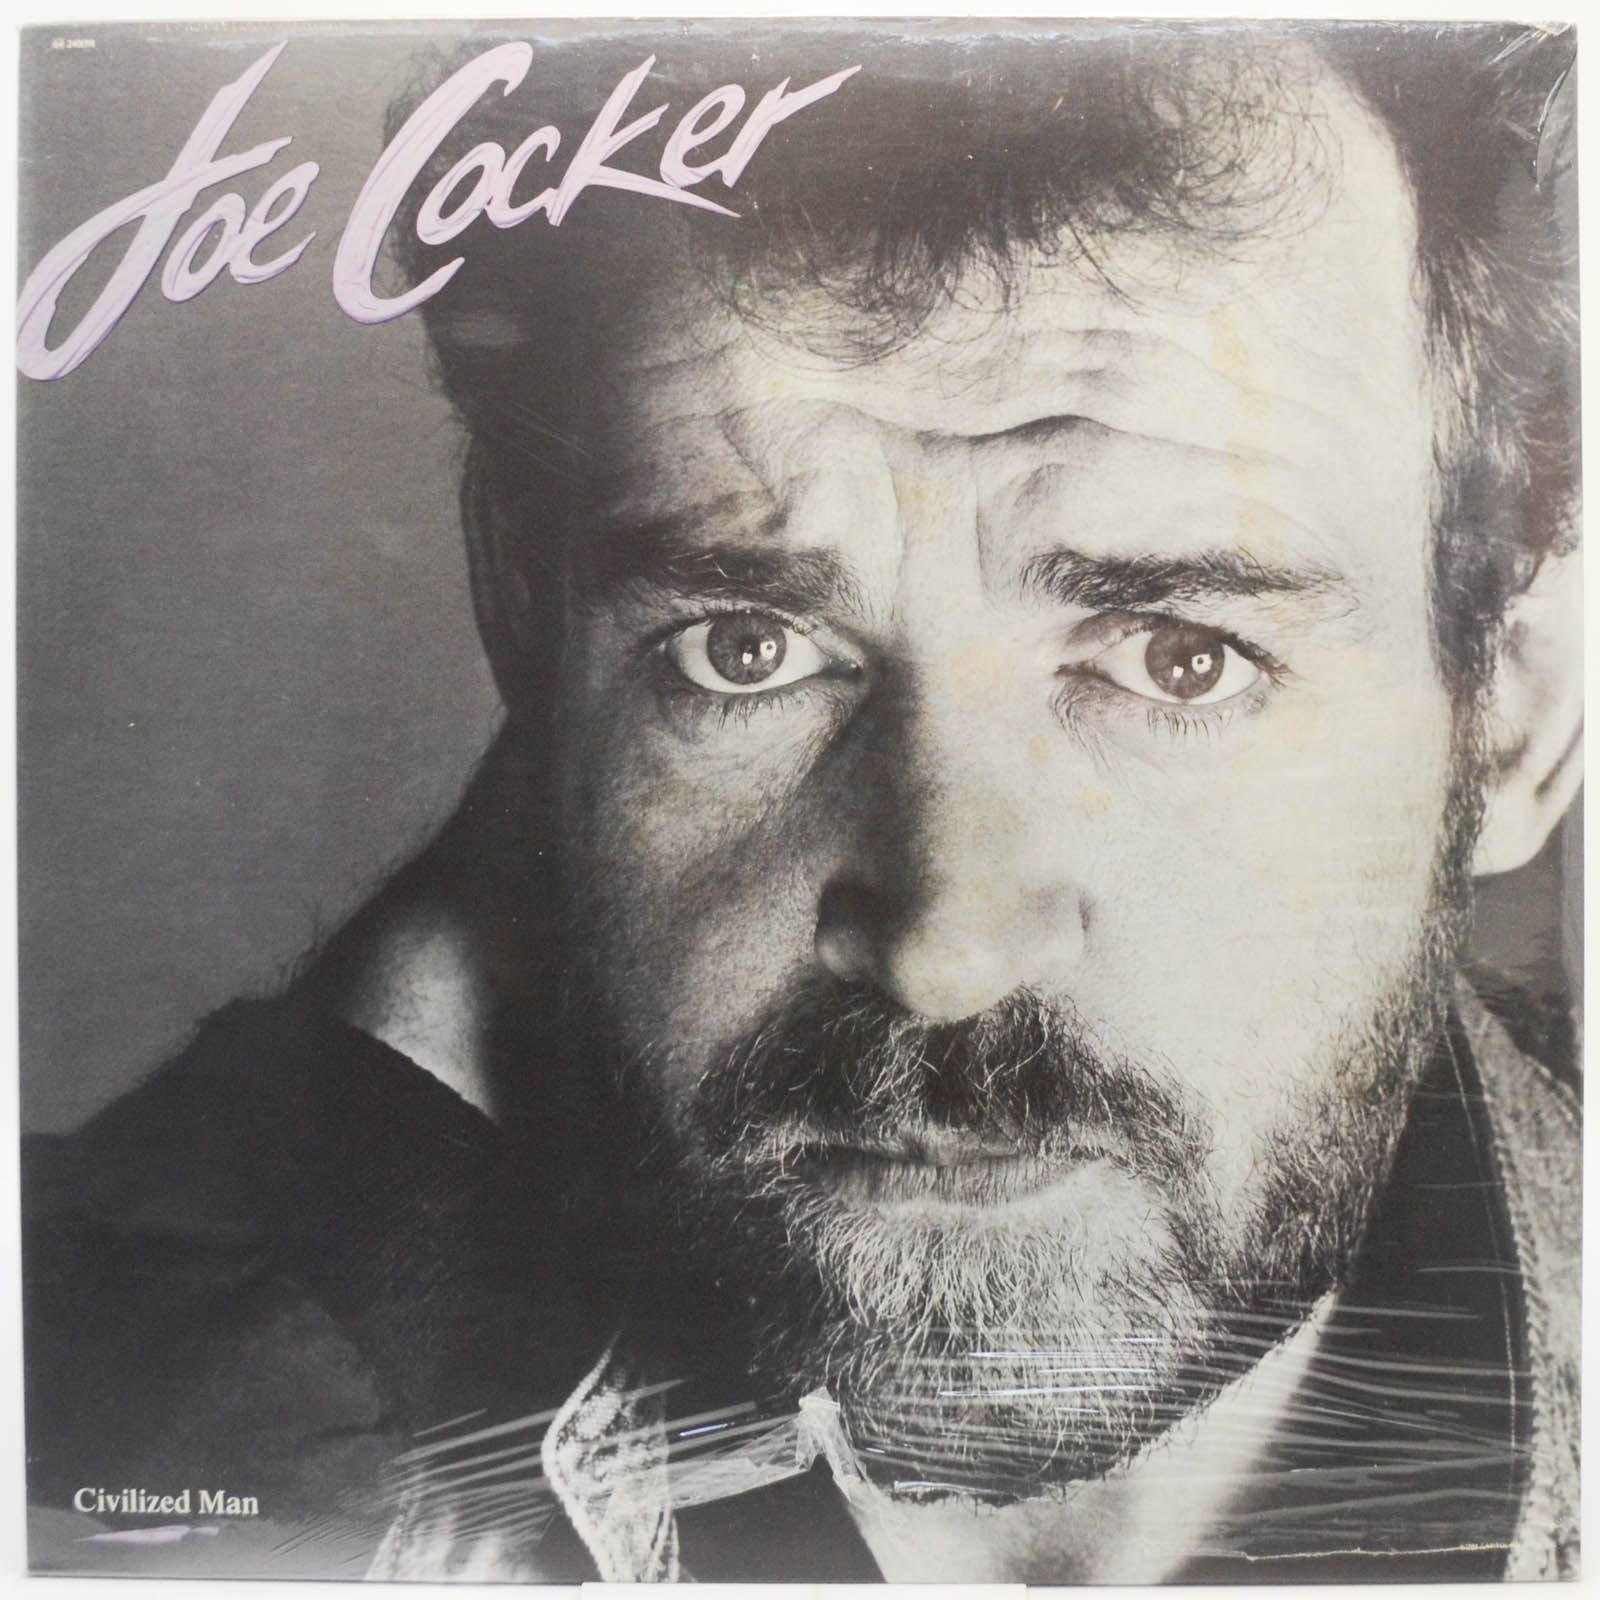 Joe Cocker — Civilized Man, 1984